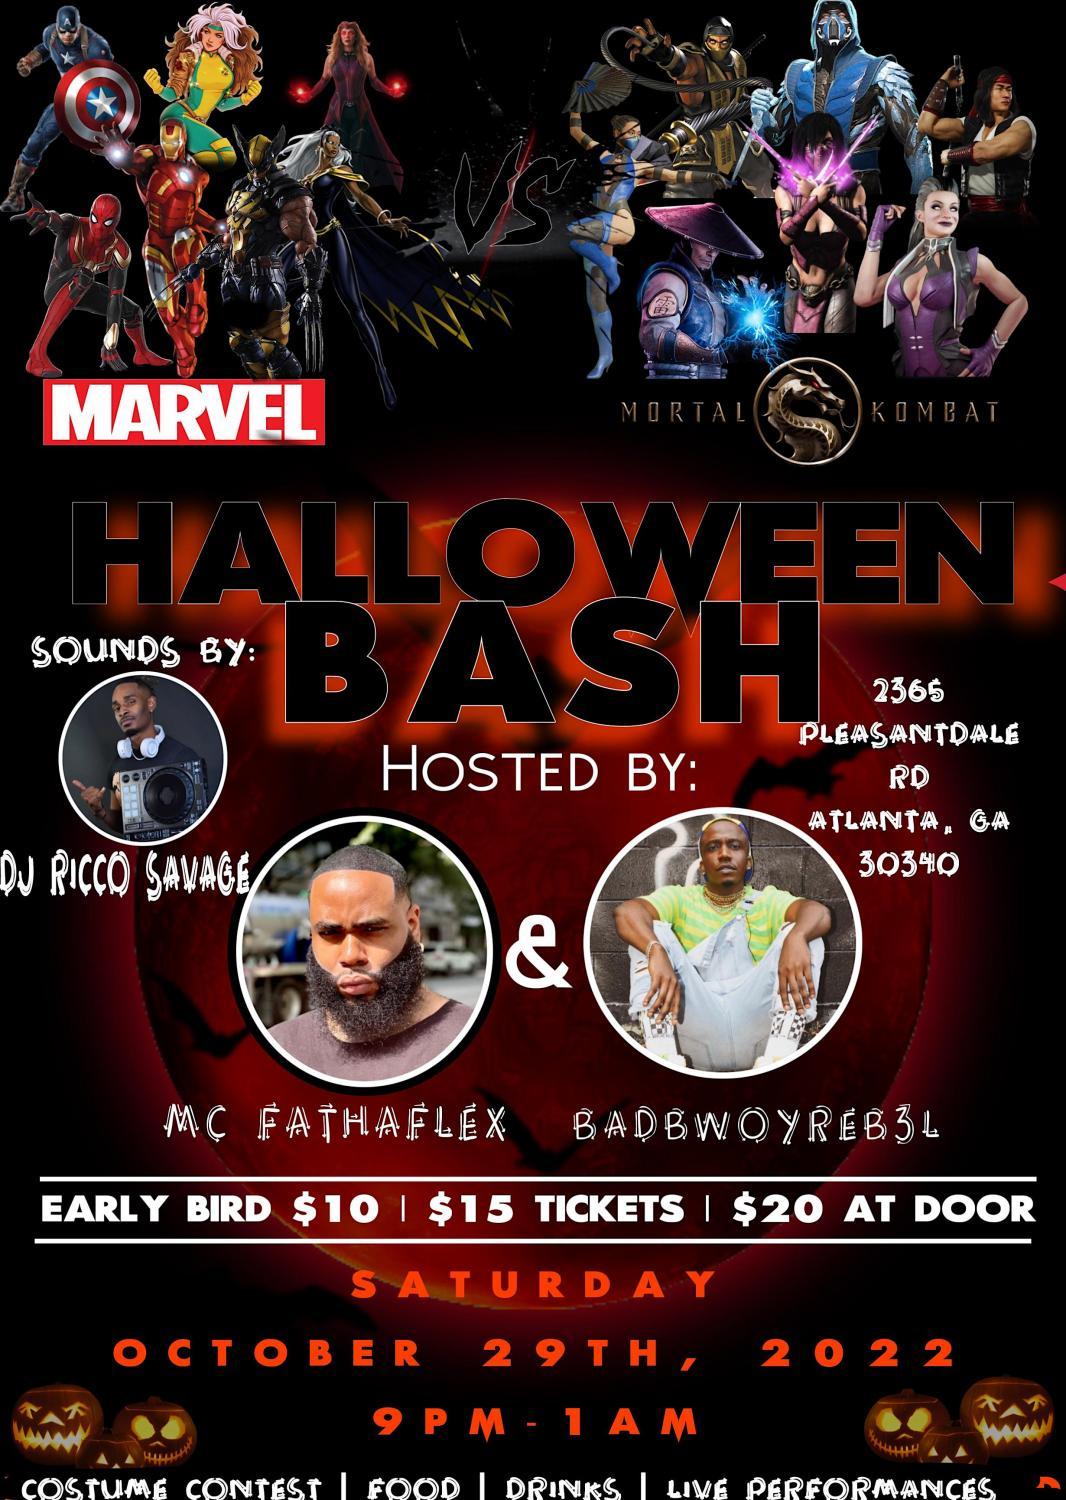 Marvel vs Mortal Kombat Halloween Bash
Sat Oct 29, 8:30 PM - Sun Oct 30, 12:00 AM
in 14 days